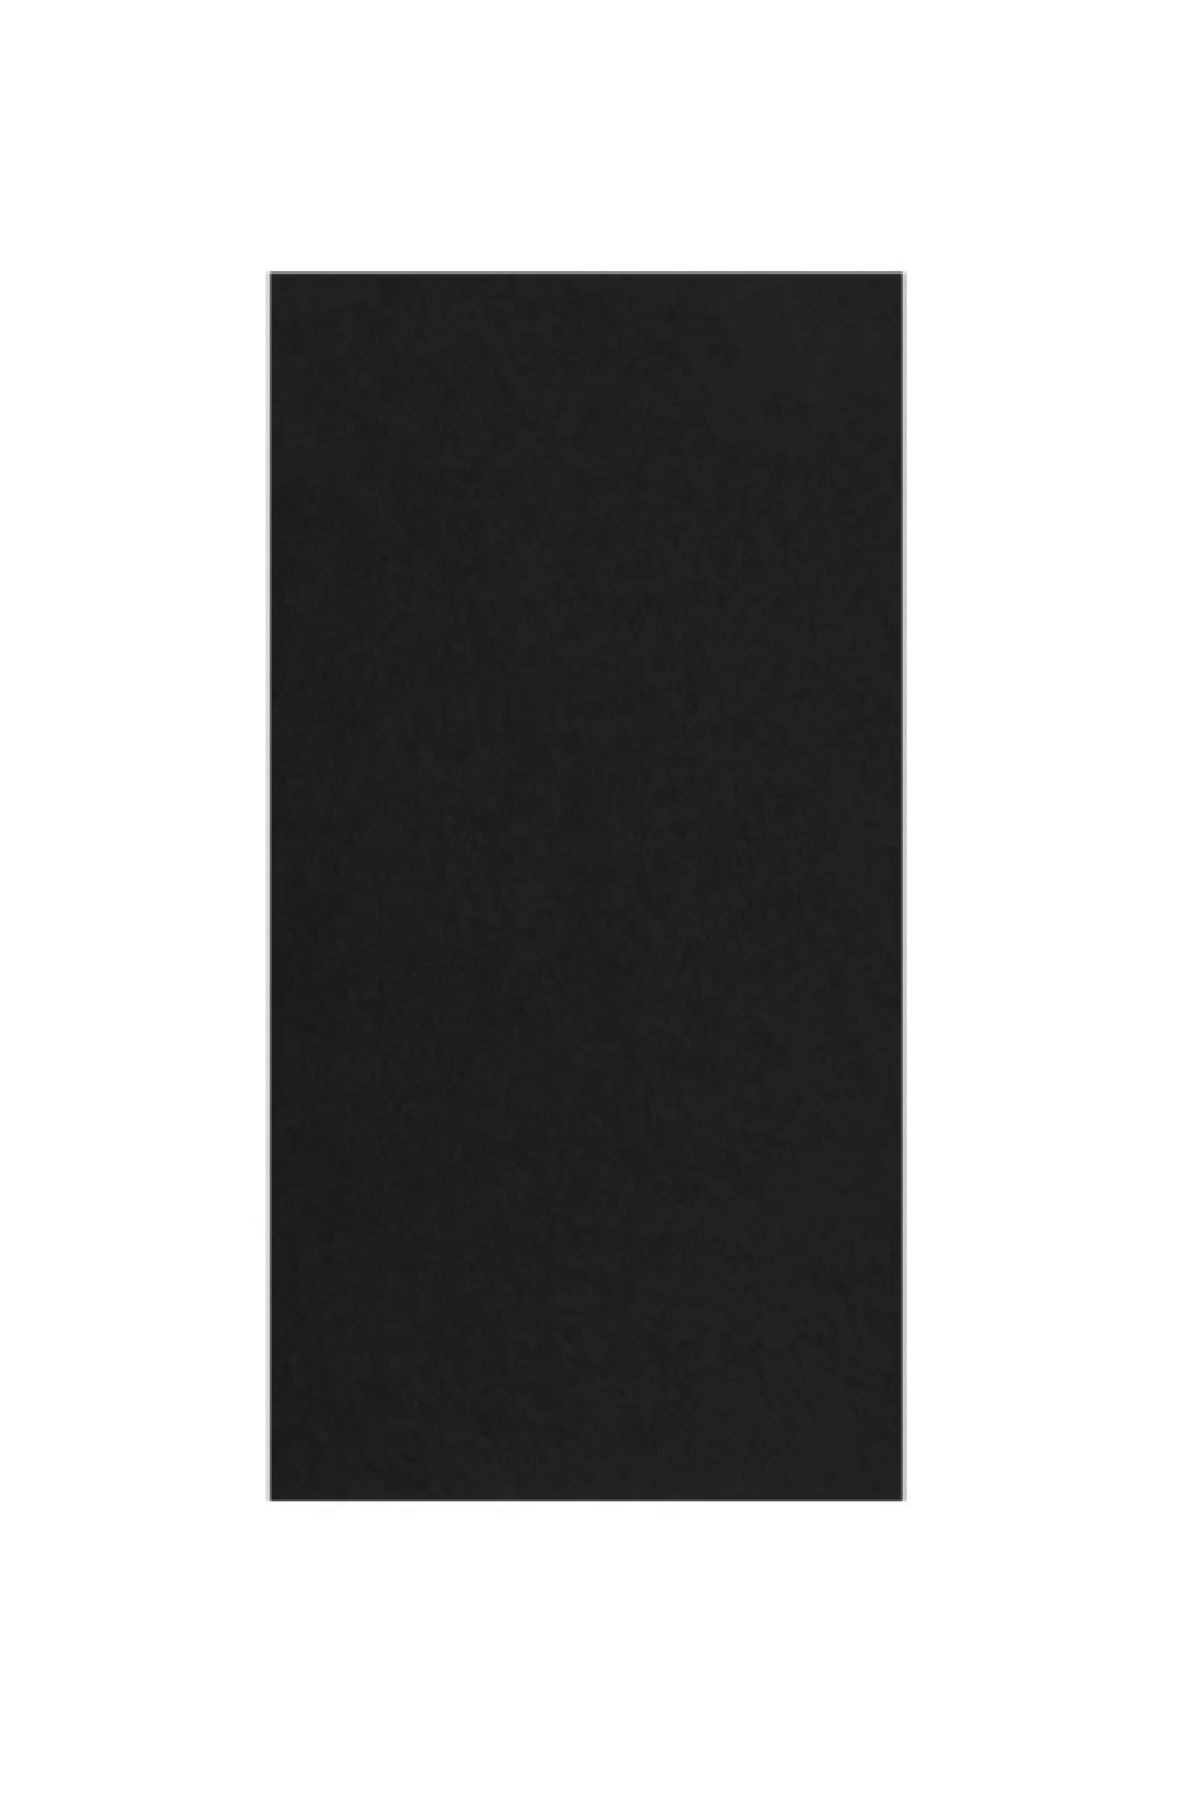 NapkinStore Siyah Peçete 20'li Paket 2 katlı 33x33 1/8 Premium